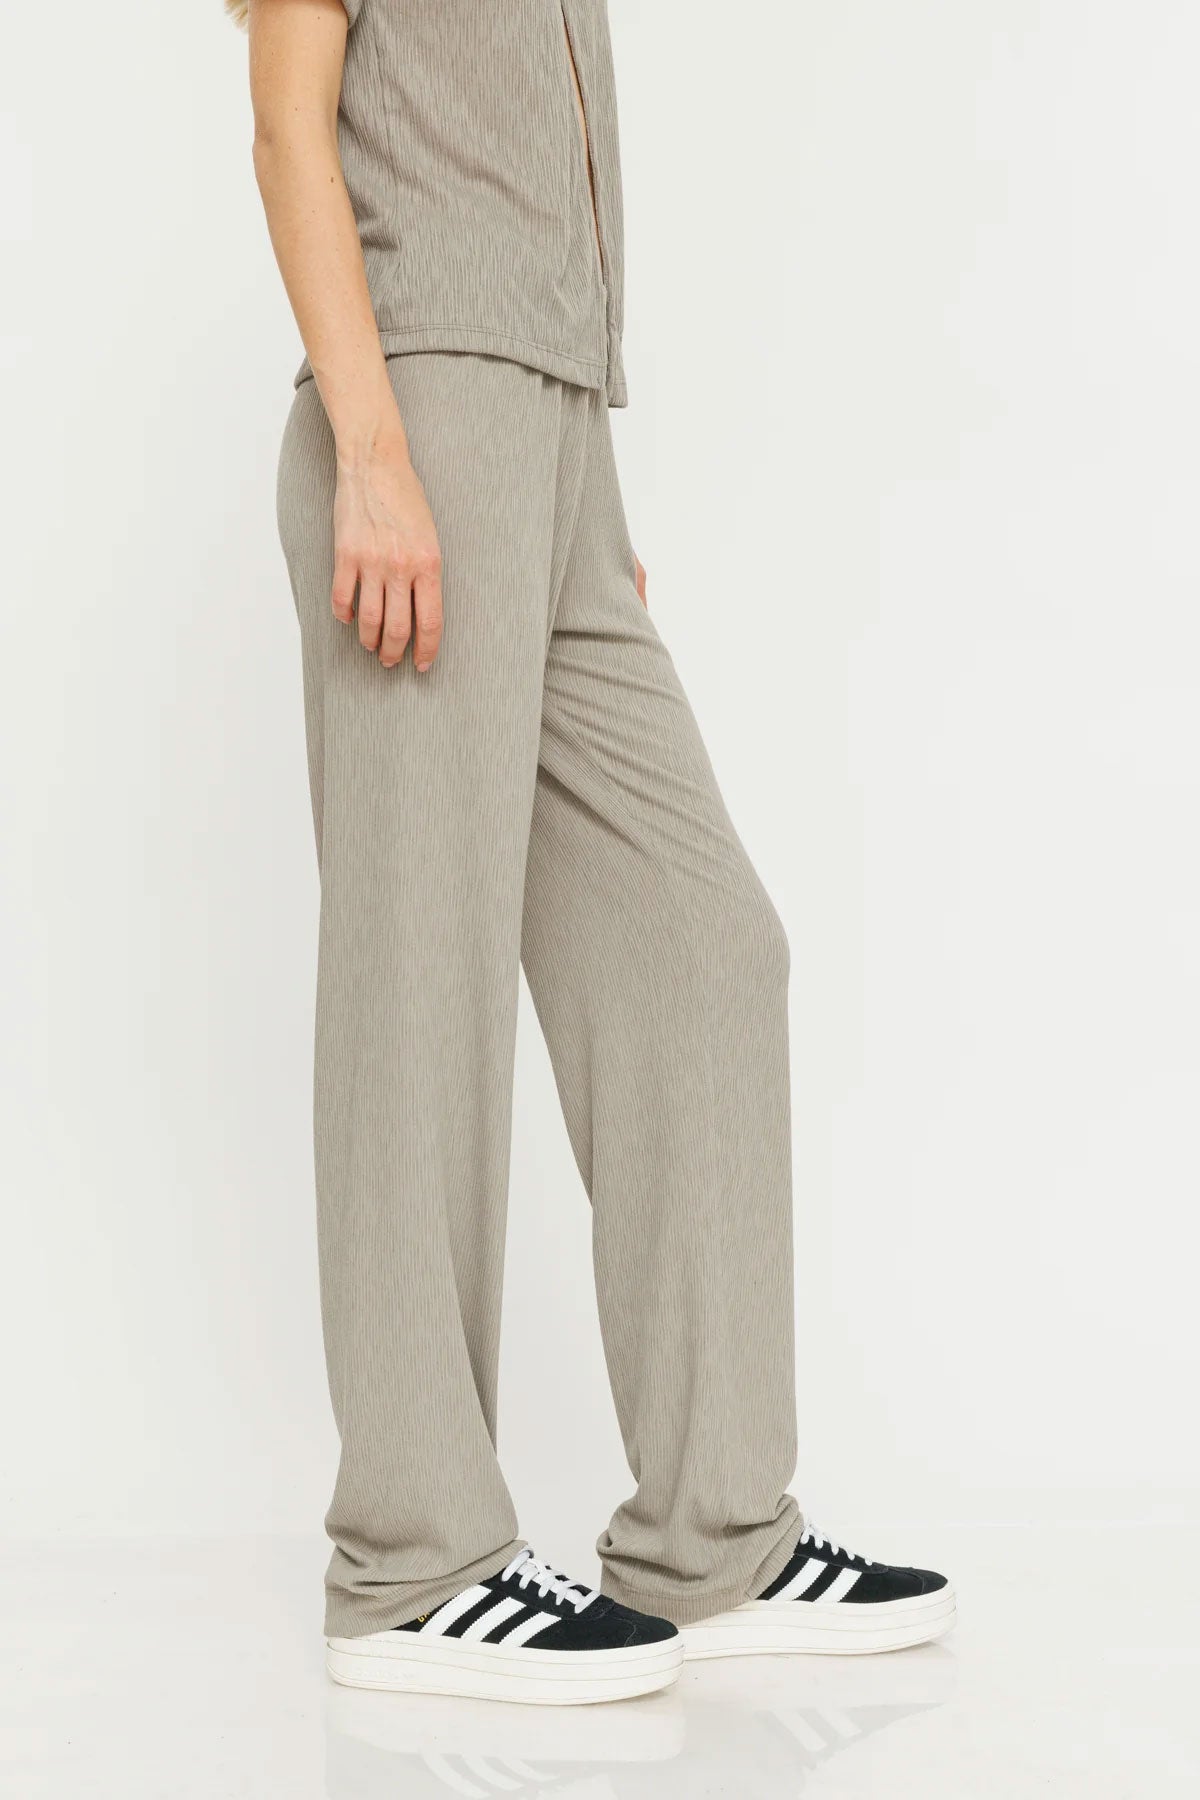 Juicy Couture מכנסיים ארוכים Selina בצבע אפור-Juicy Couture-XS-נאקו